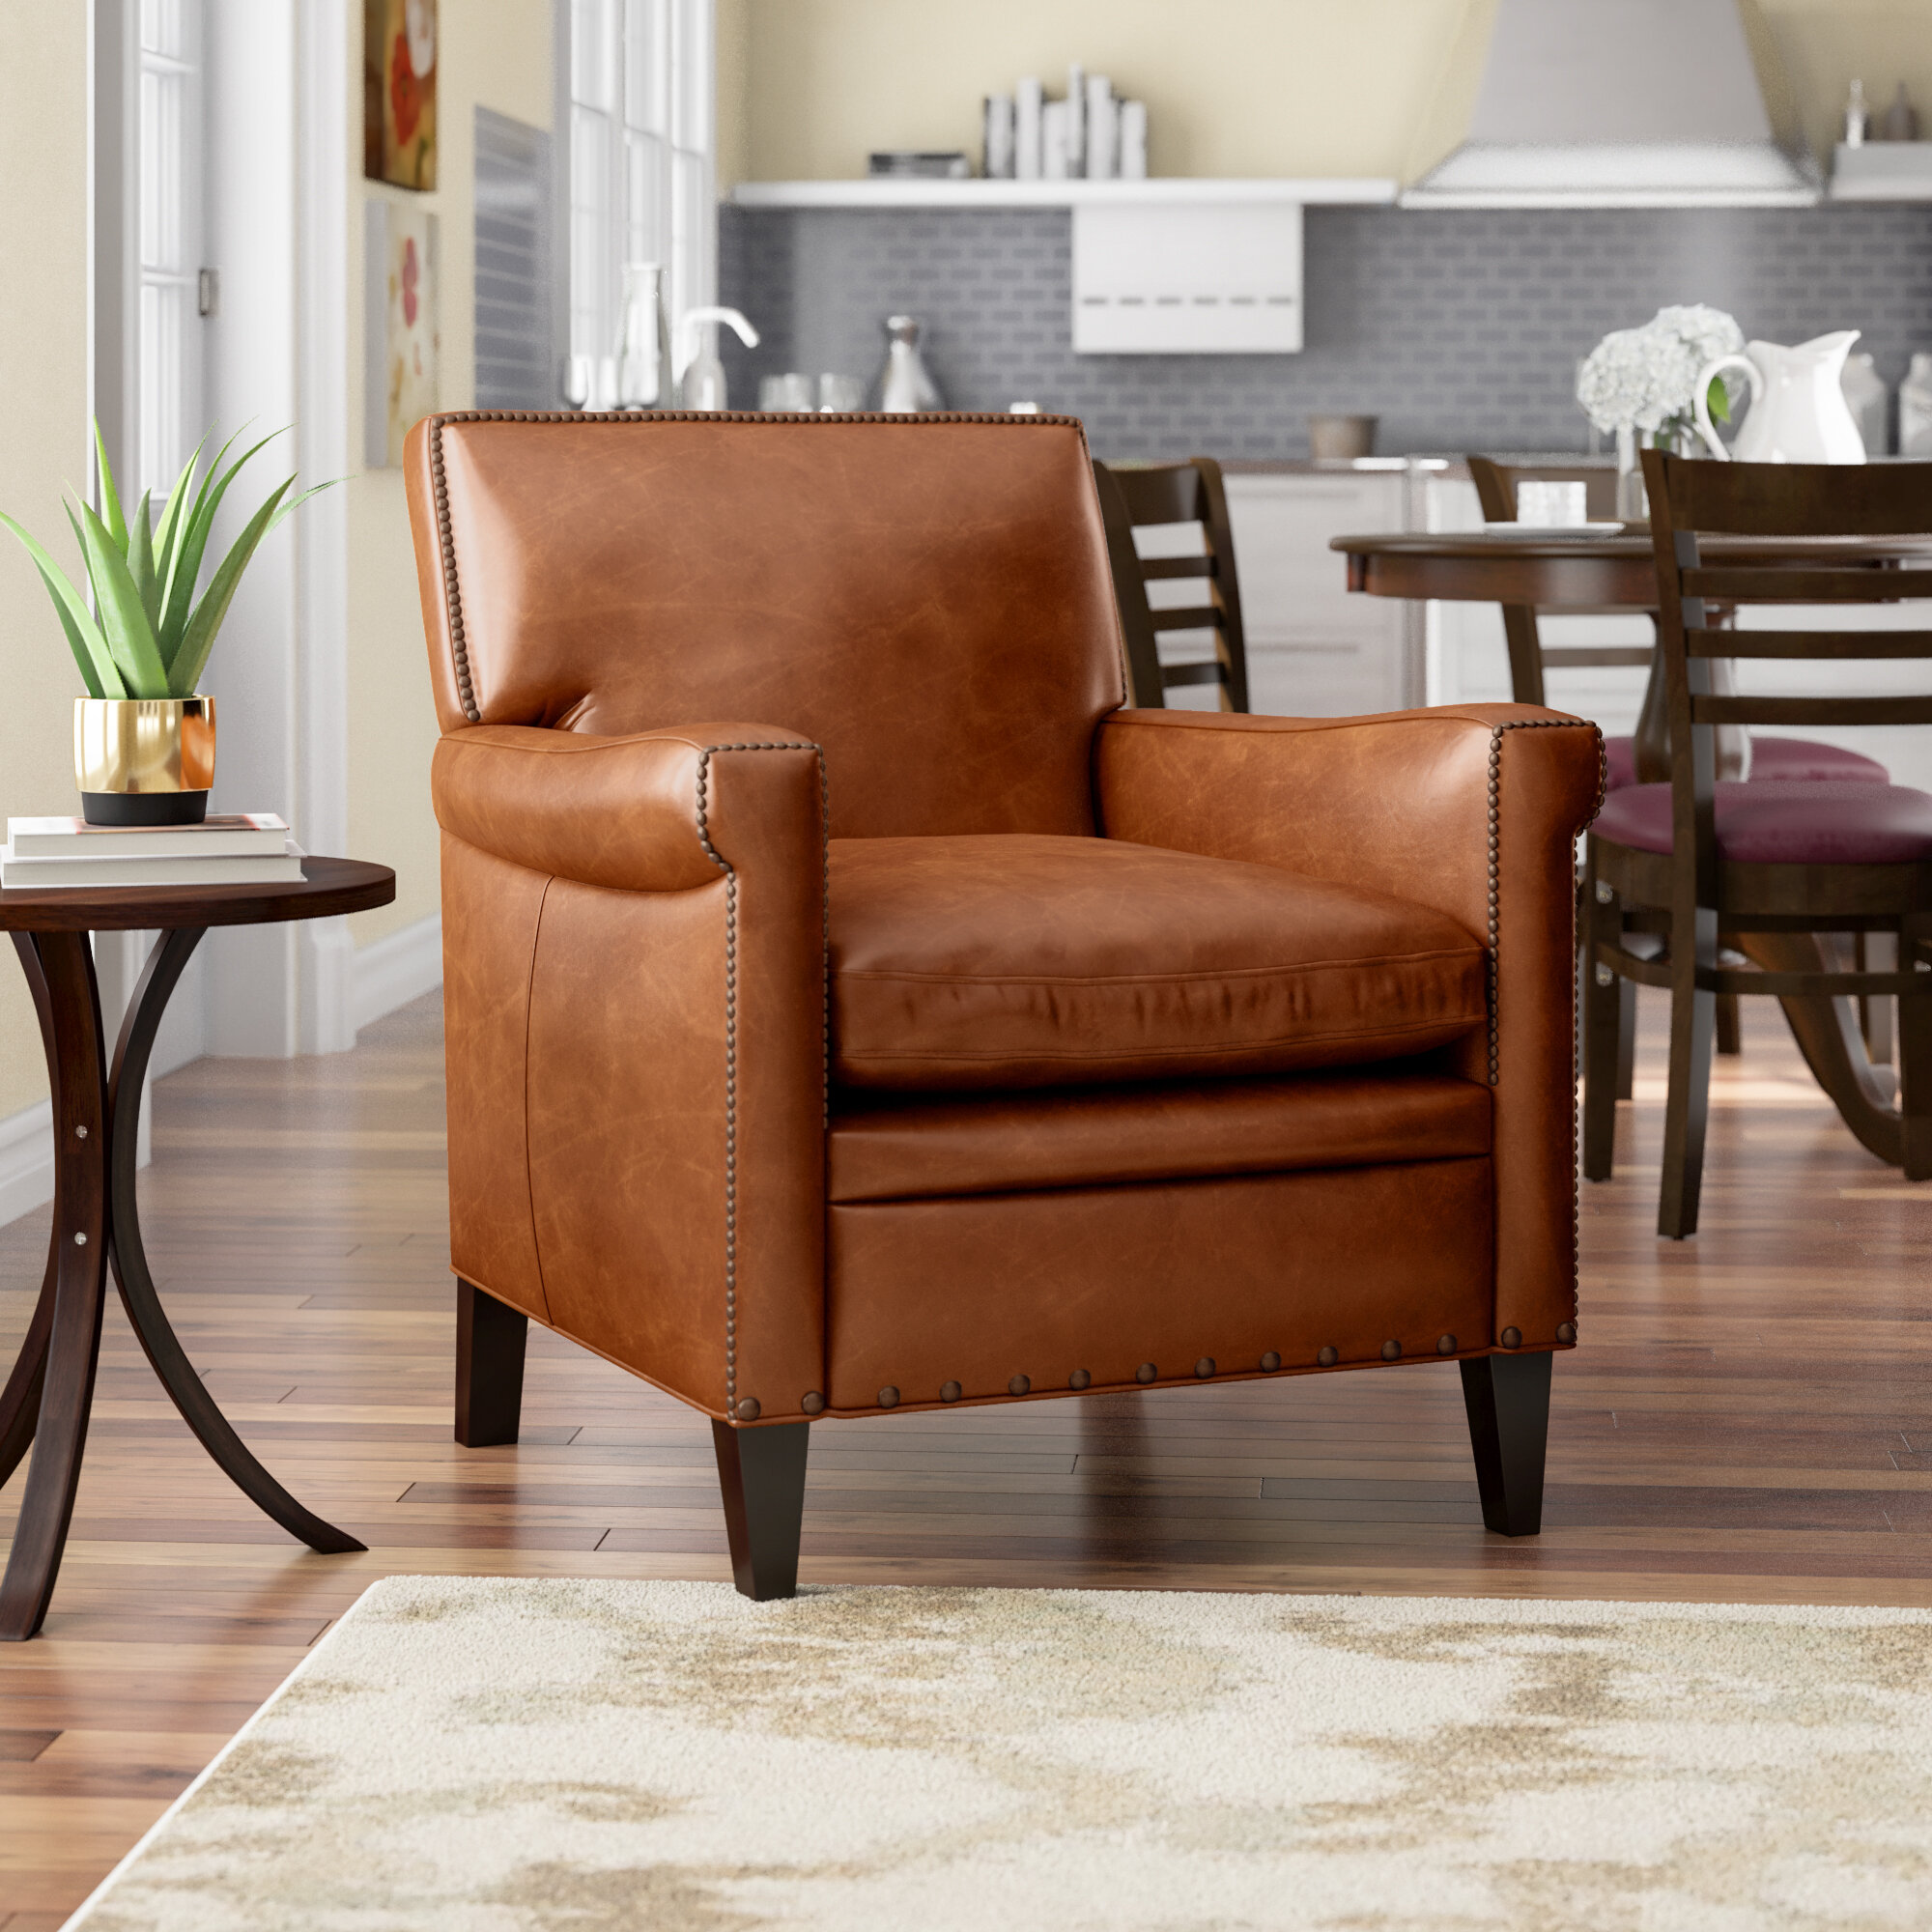 Hooker Furniture Jilian 31 Wide Genuine Leather Top Grain Leather Club Chair Reviews Wayfair